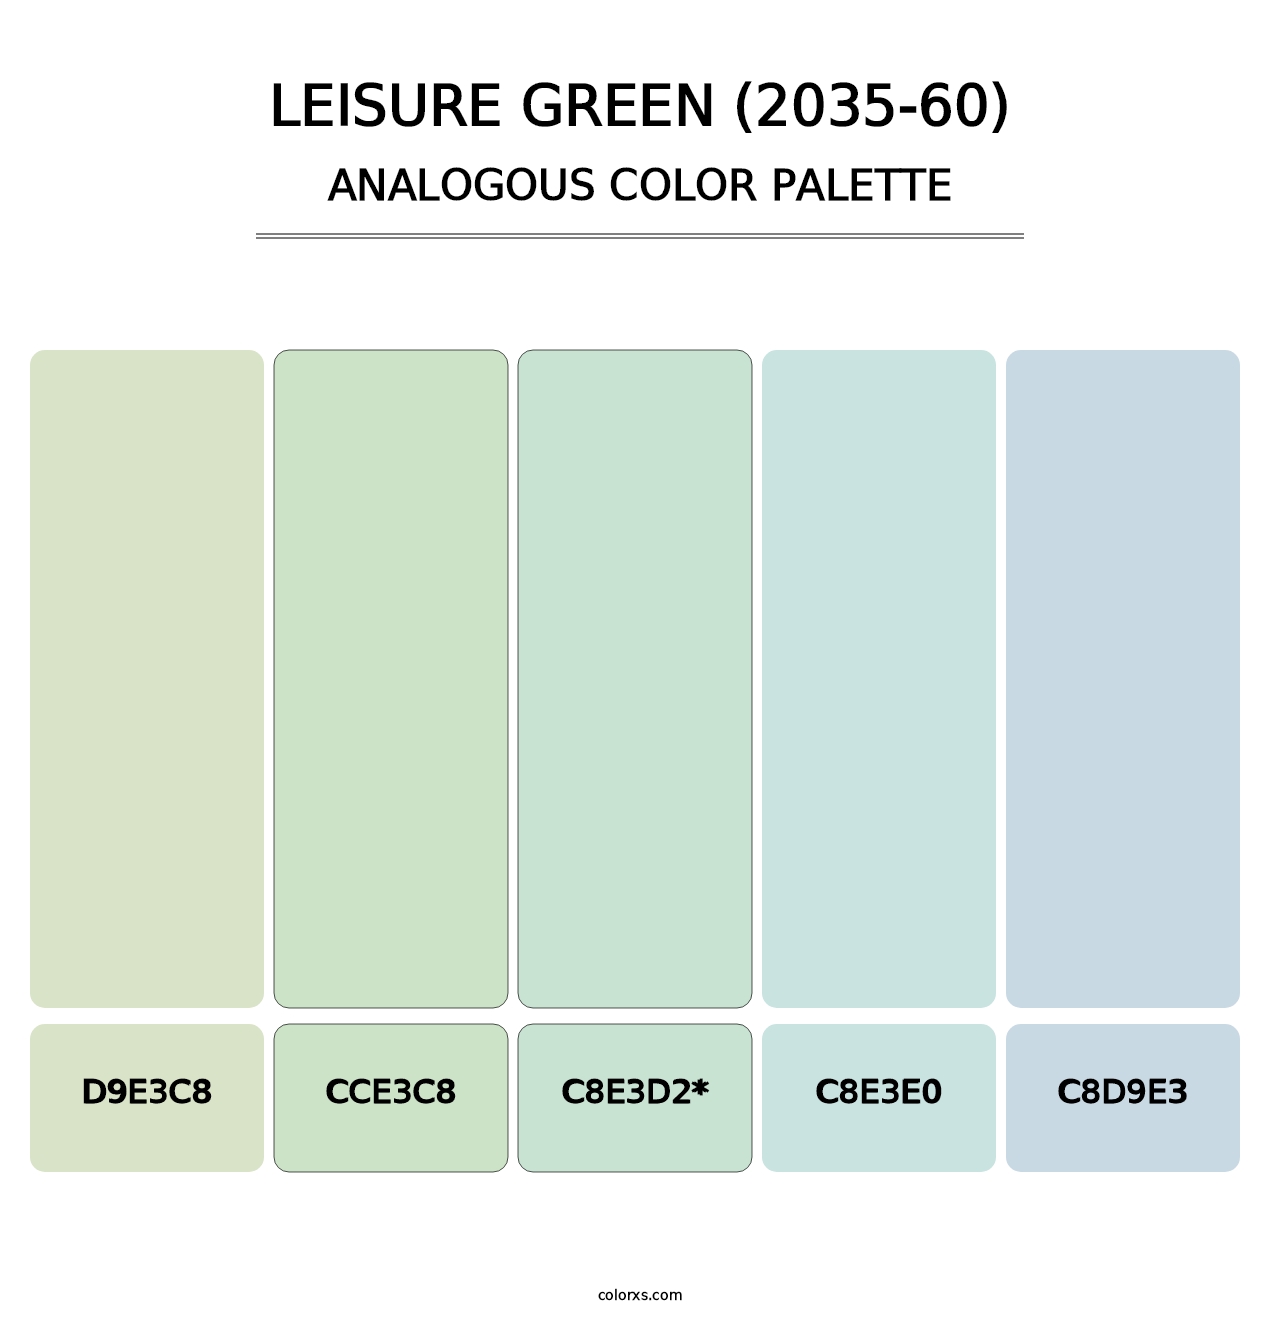 Leisure Green (2035-60) - Analogous Color Palette